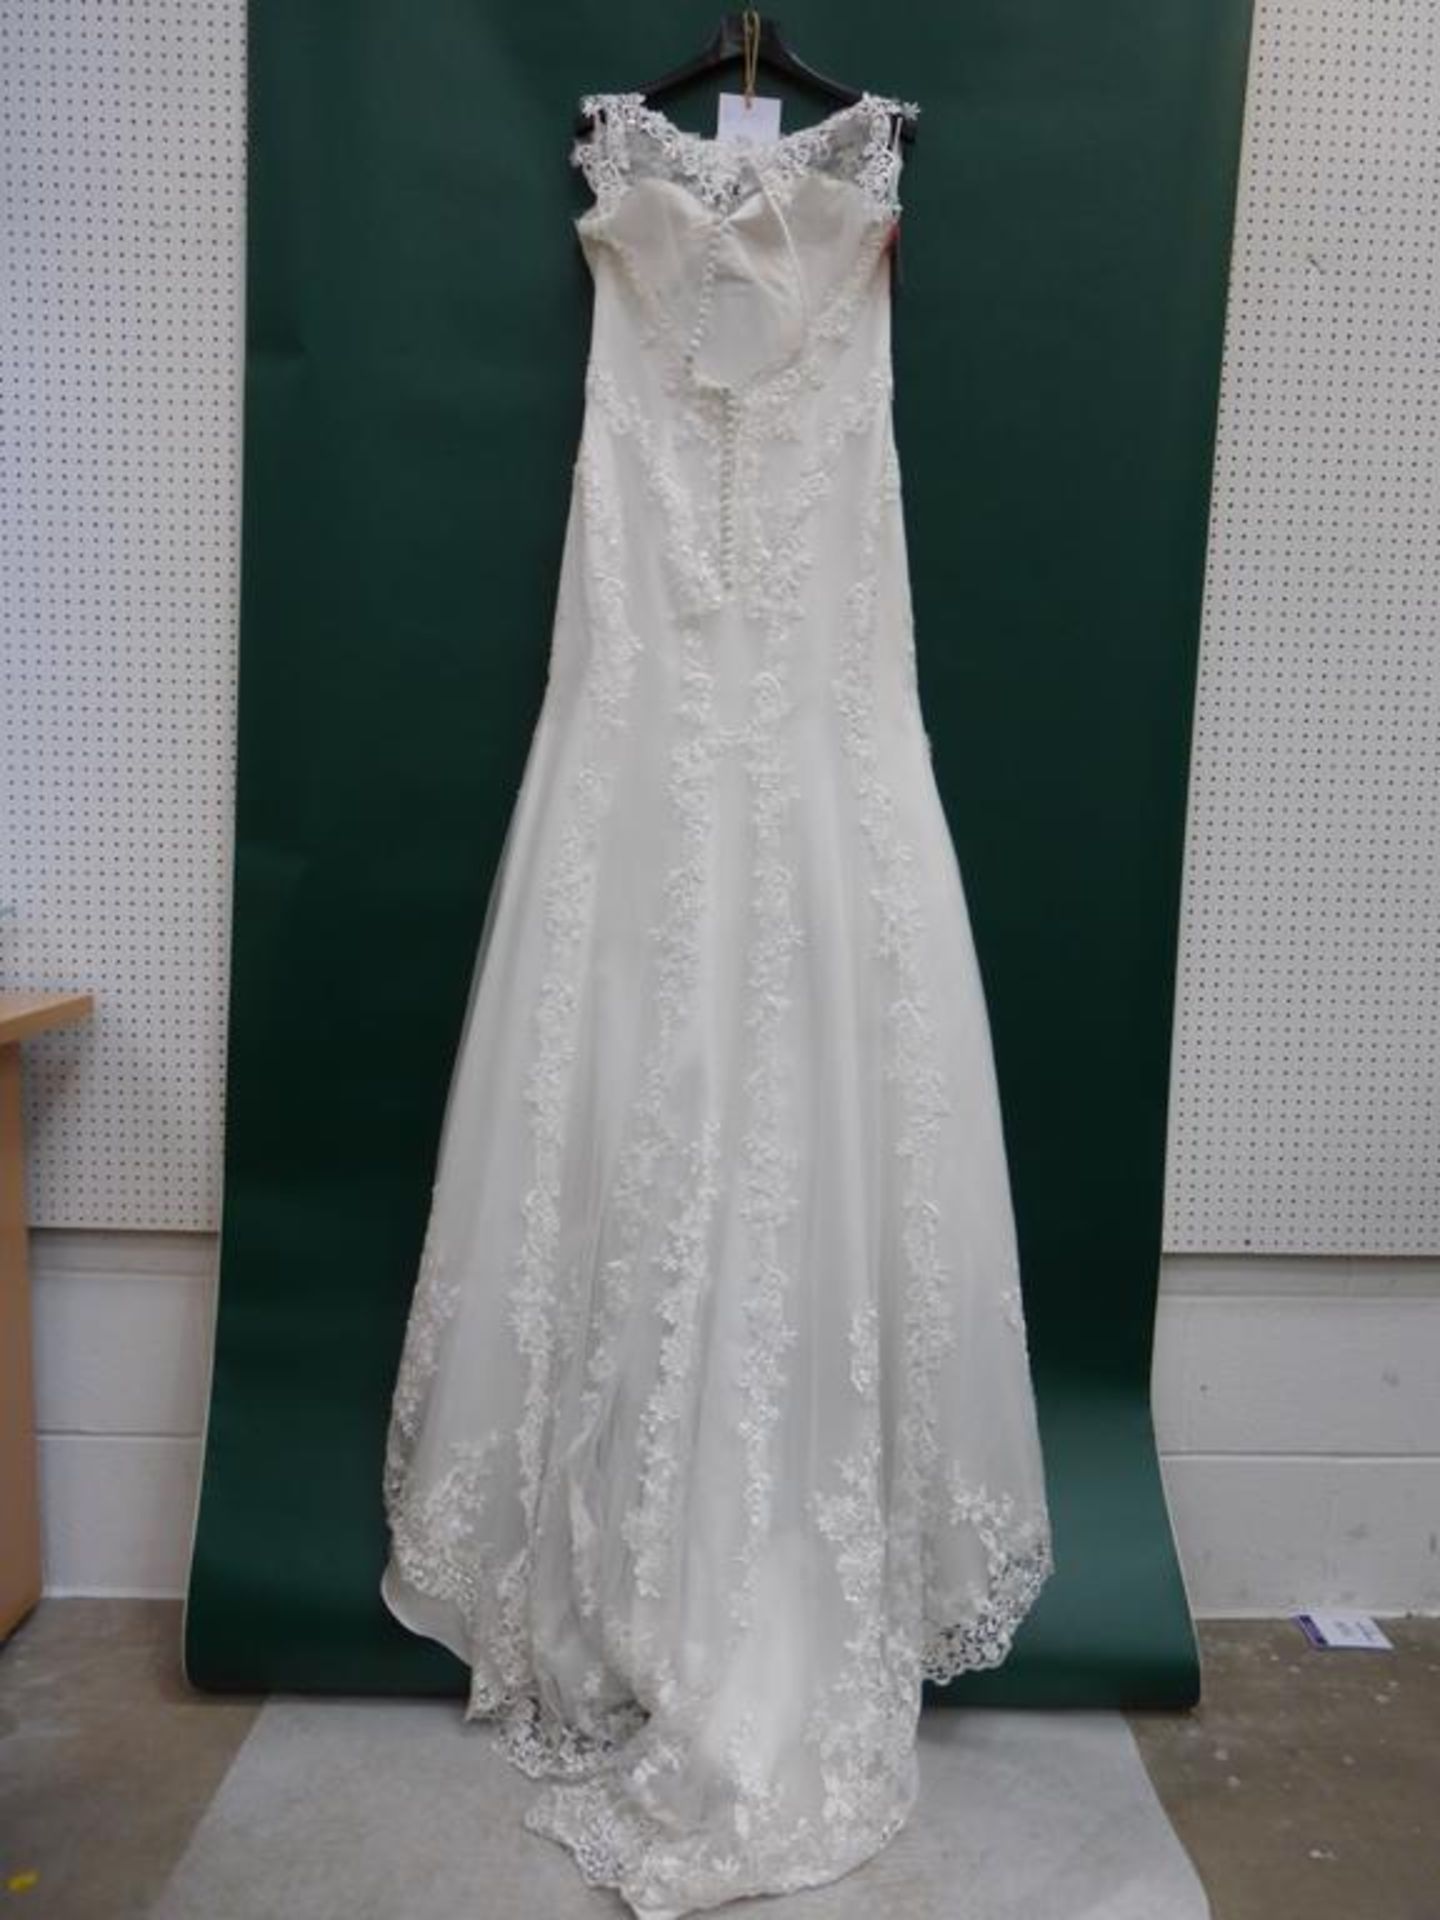 * Romantica Collections Wedding Dress UK Size 14 (RRP £1085)